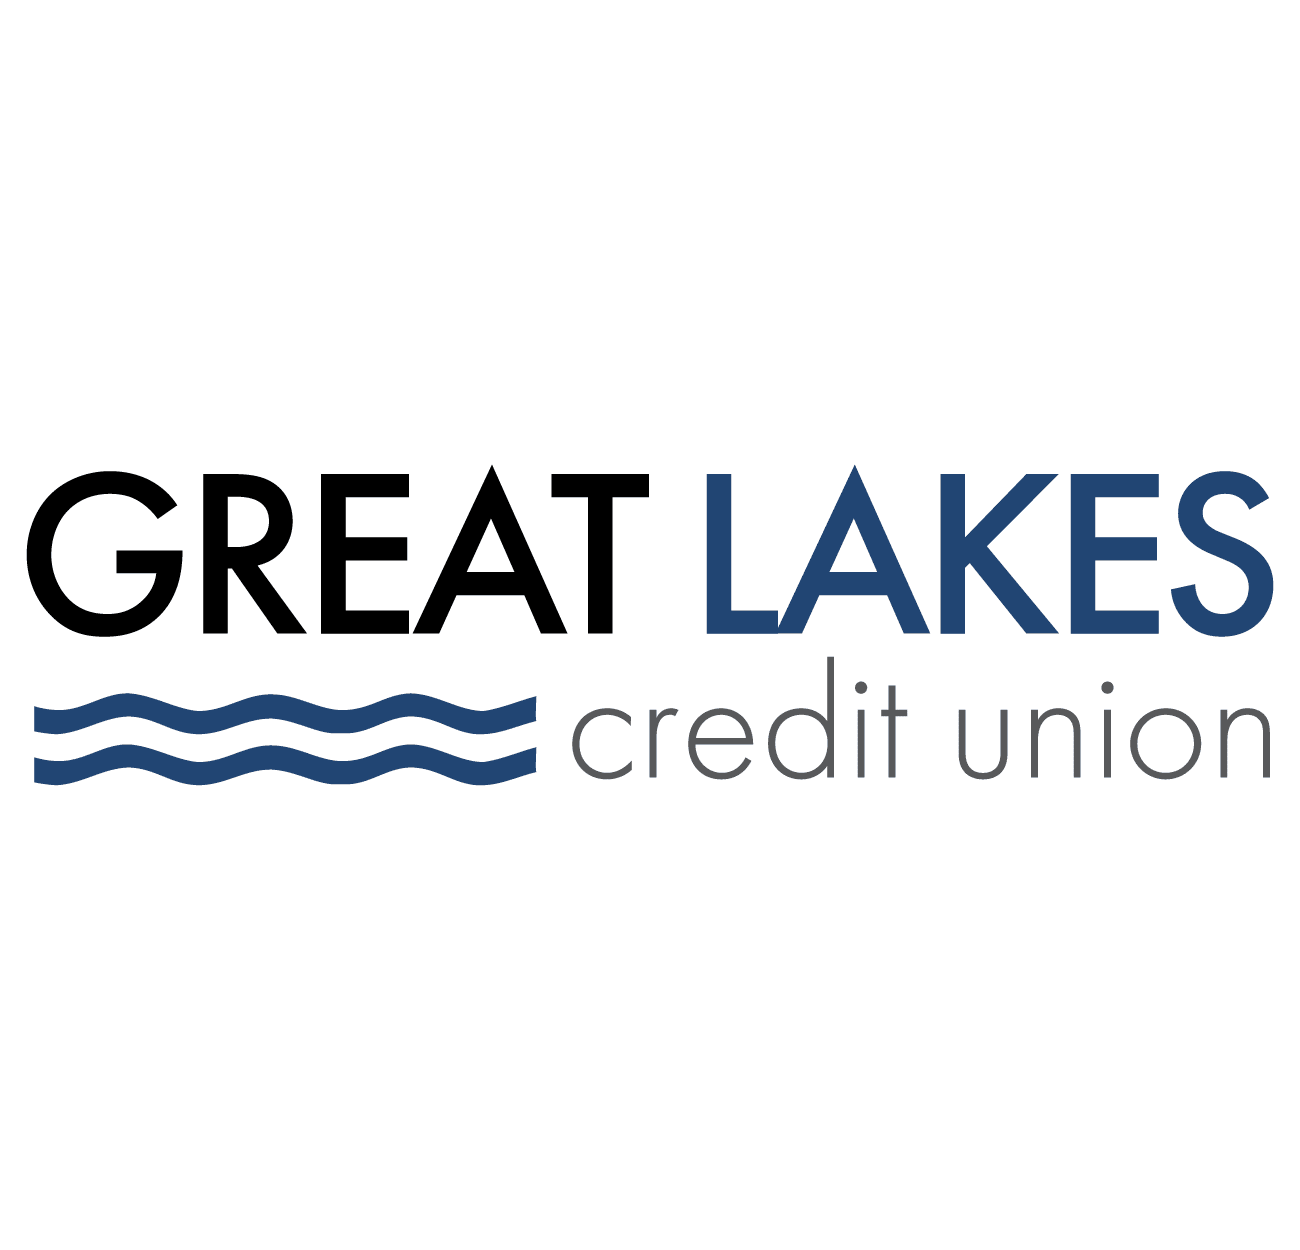 Great Lakes Credit Union 12-month CD via Raisin